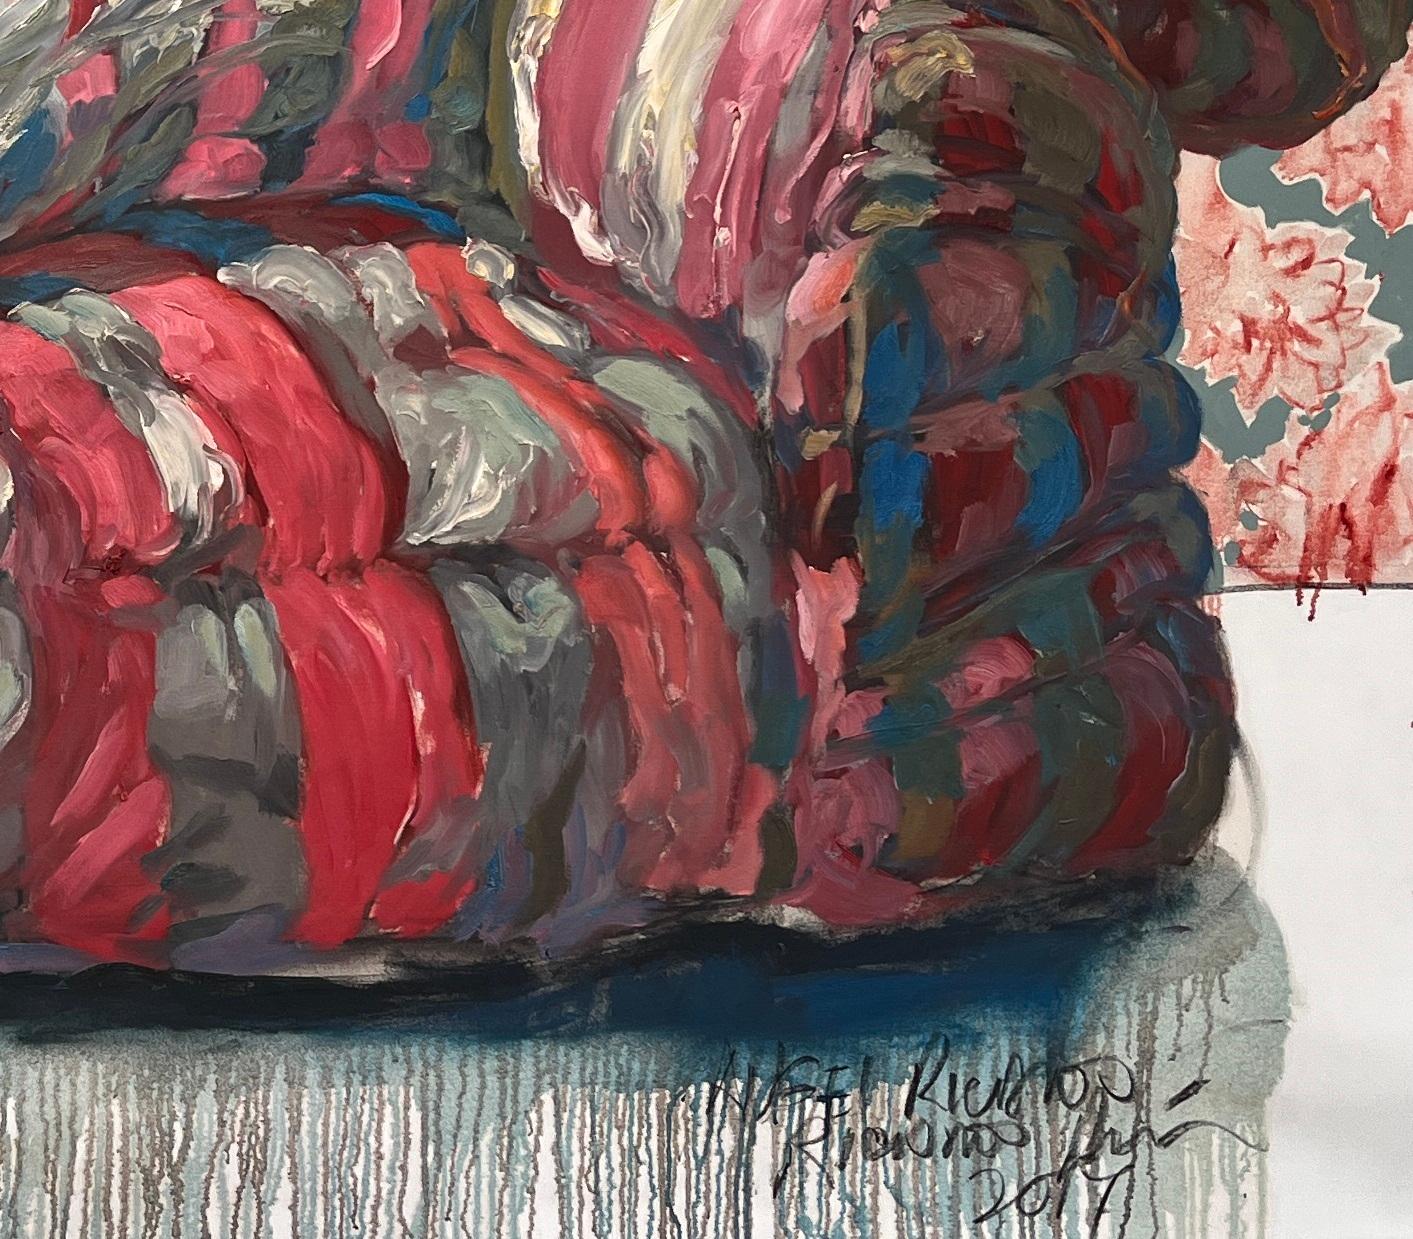 Angel Ricardo Ricardo Rios, Ohne Titel, 2017, Öl auf Leinwand, 53x96 in. – Painting von Ángel Ricardo Ricardo Ríos